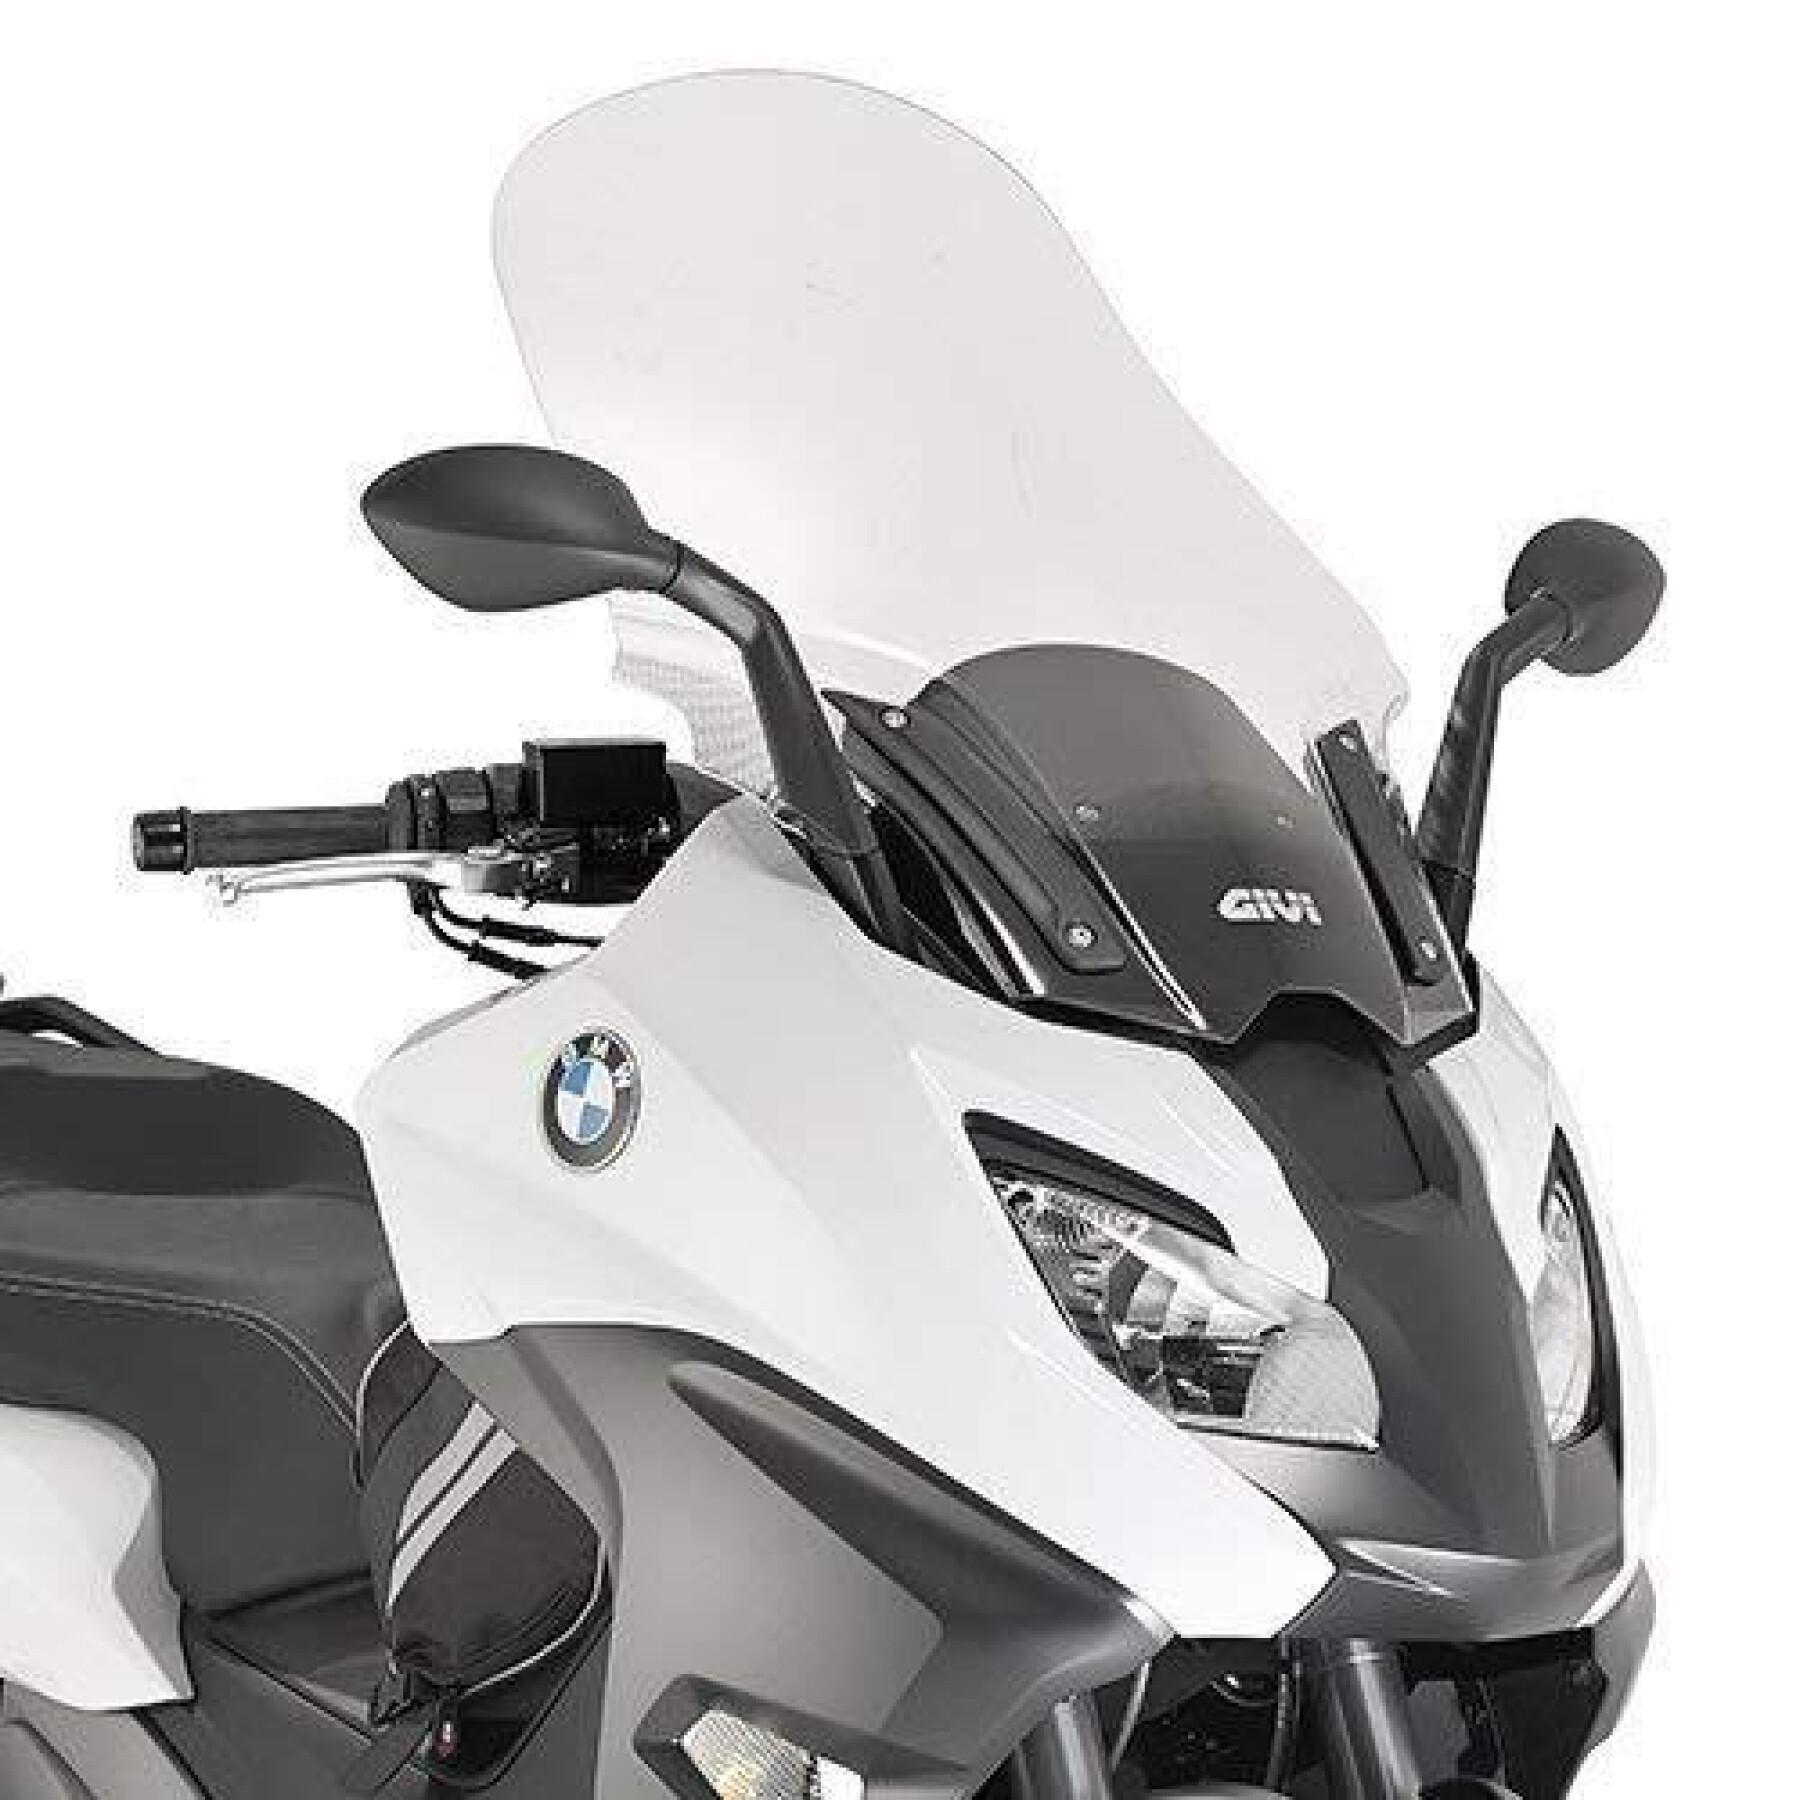 Pare-brise scooter Givi BMW C 650 Sport (2016 à 2020)